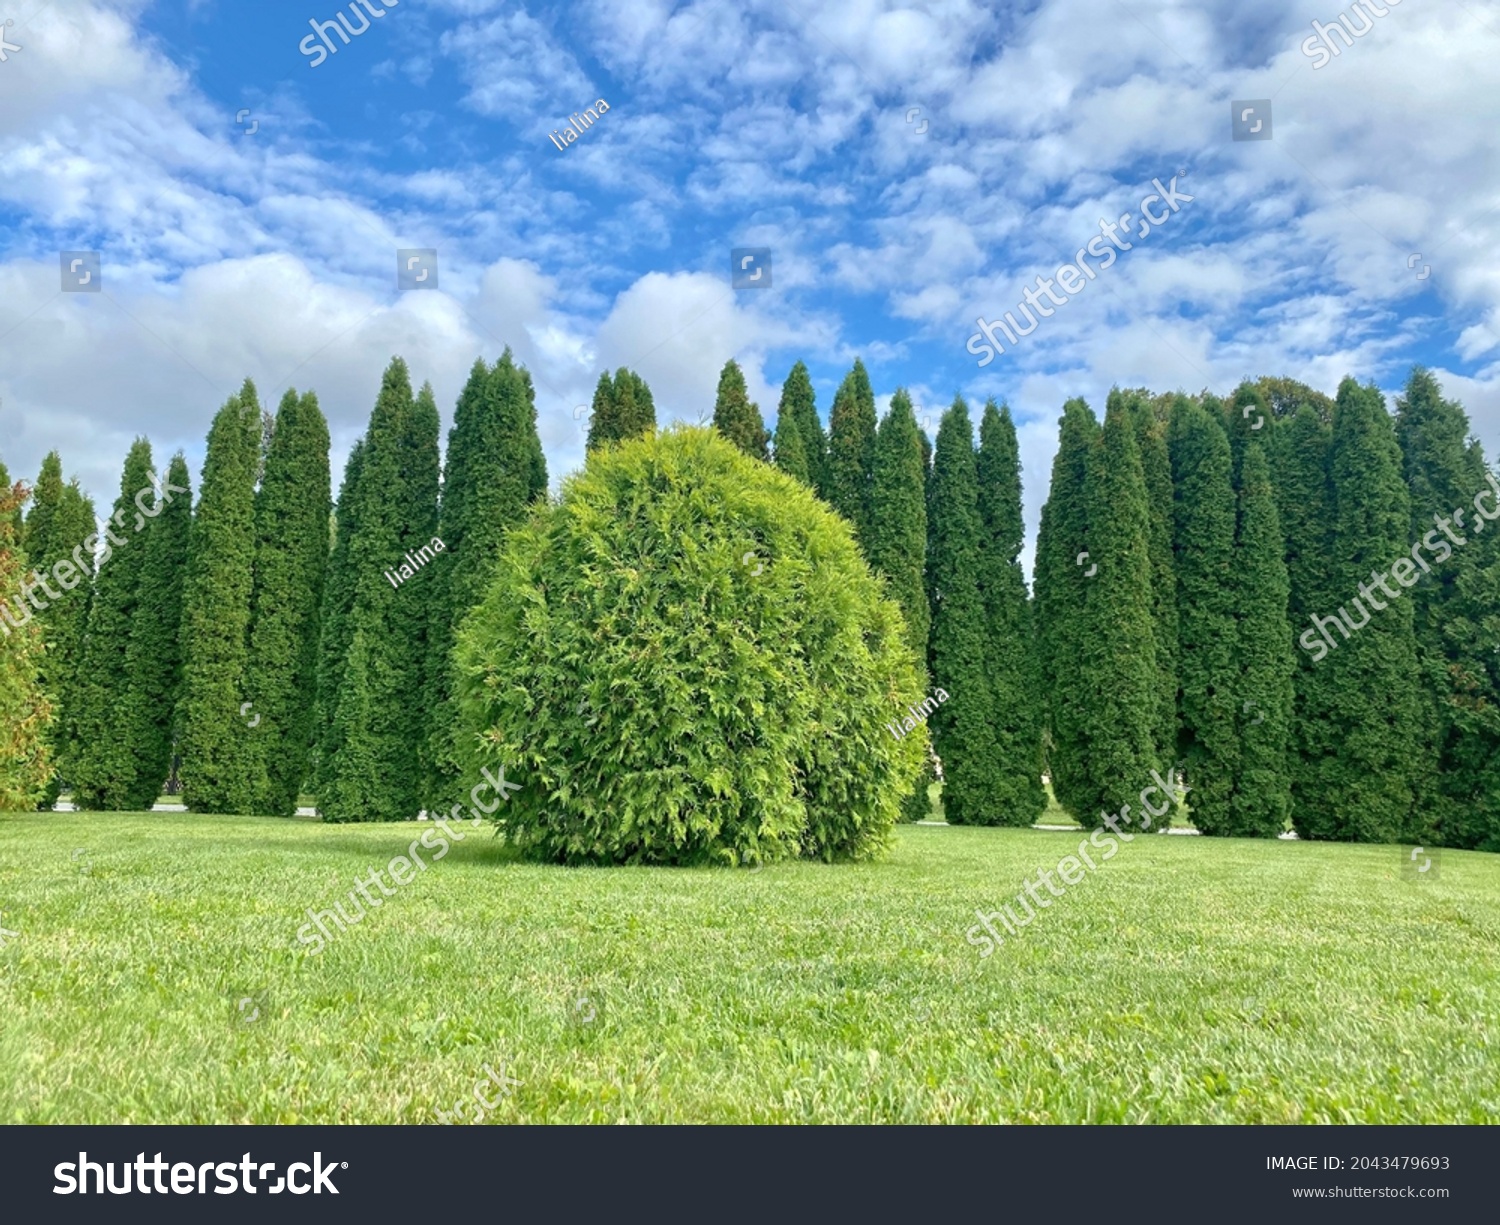 Green grass lawn with Thuja occidentalis American Pillar shrub. American Pillar Arborvitae evergreen bushes with bright green feathery dense foliage. Idyllic natural landscape in summer park. #2043479693